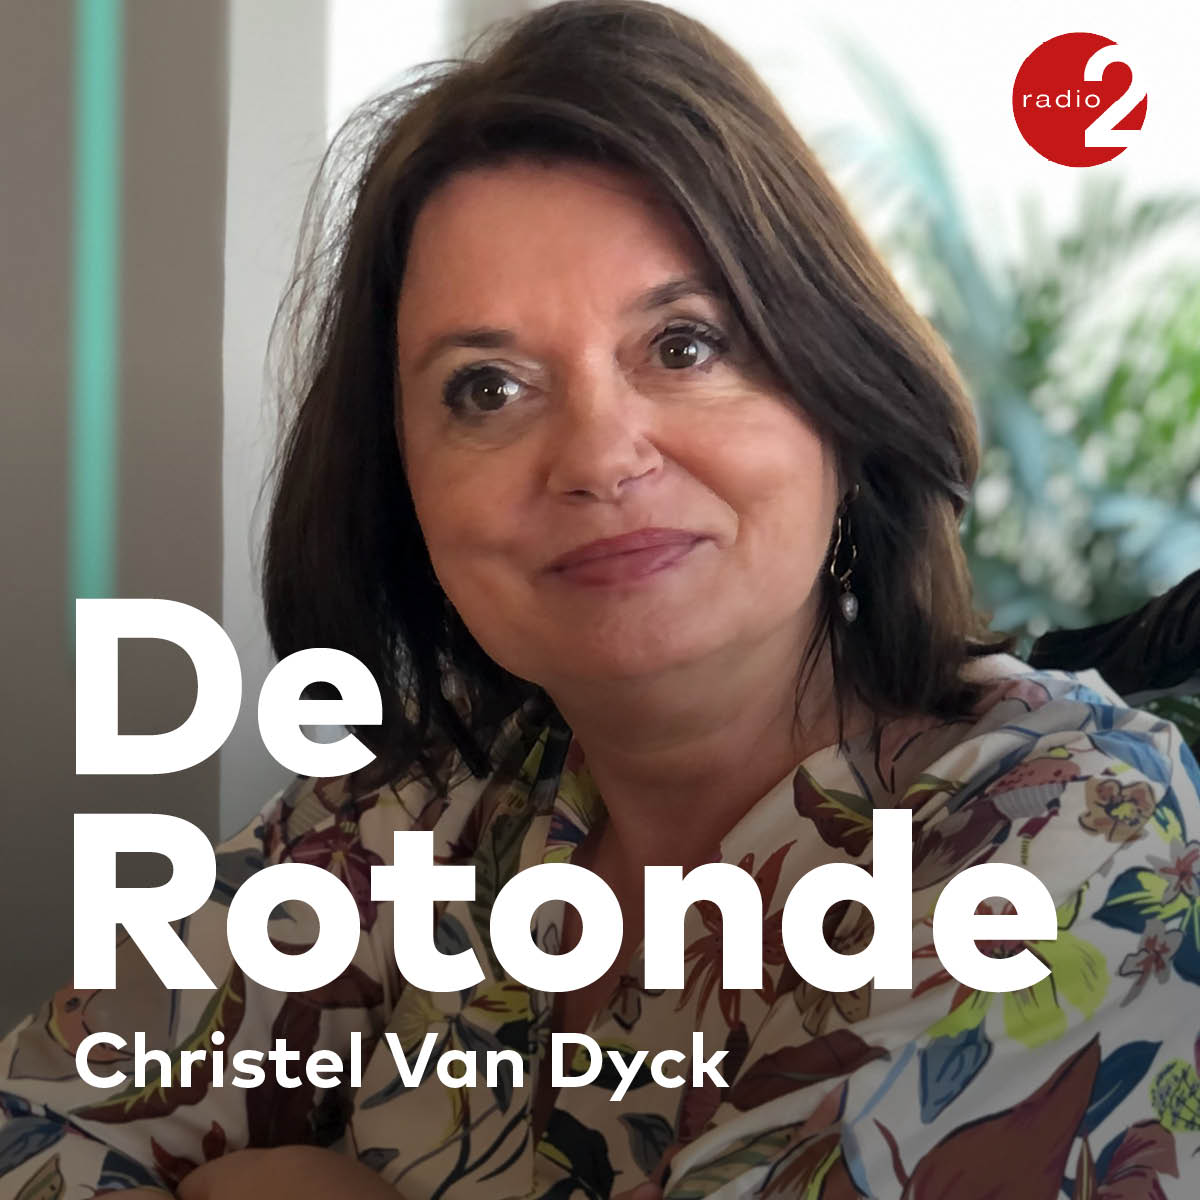 De Rotonde... Christel Van Dyck